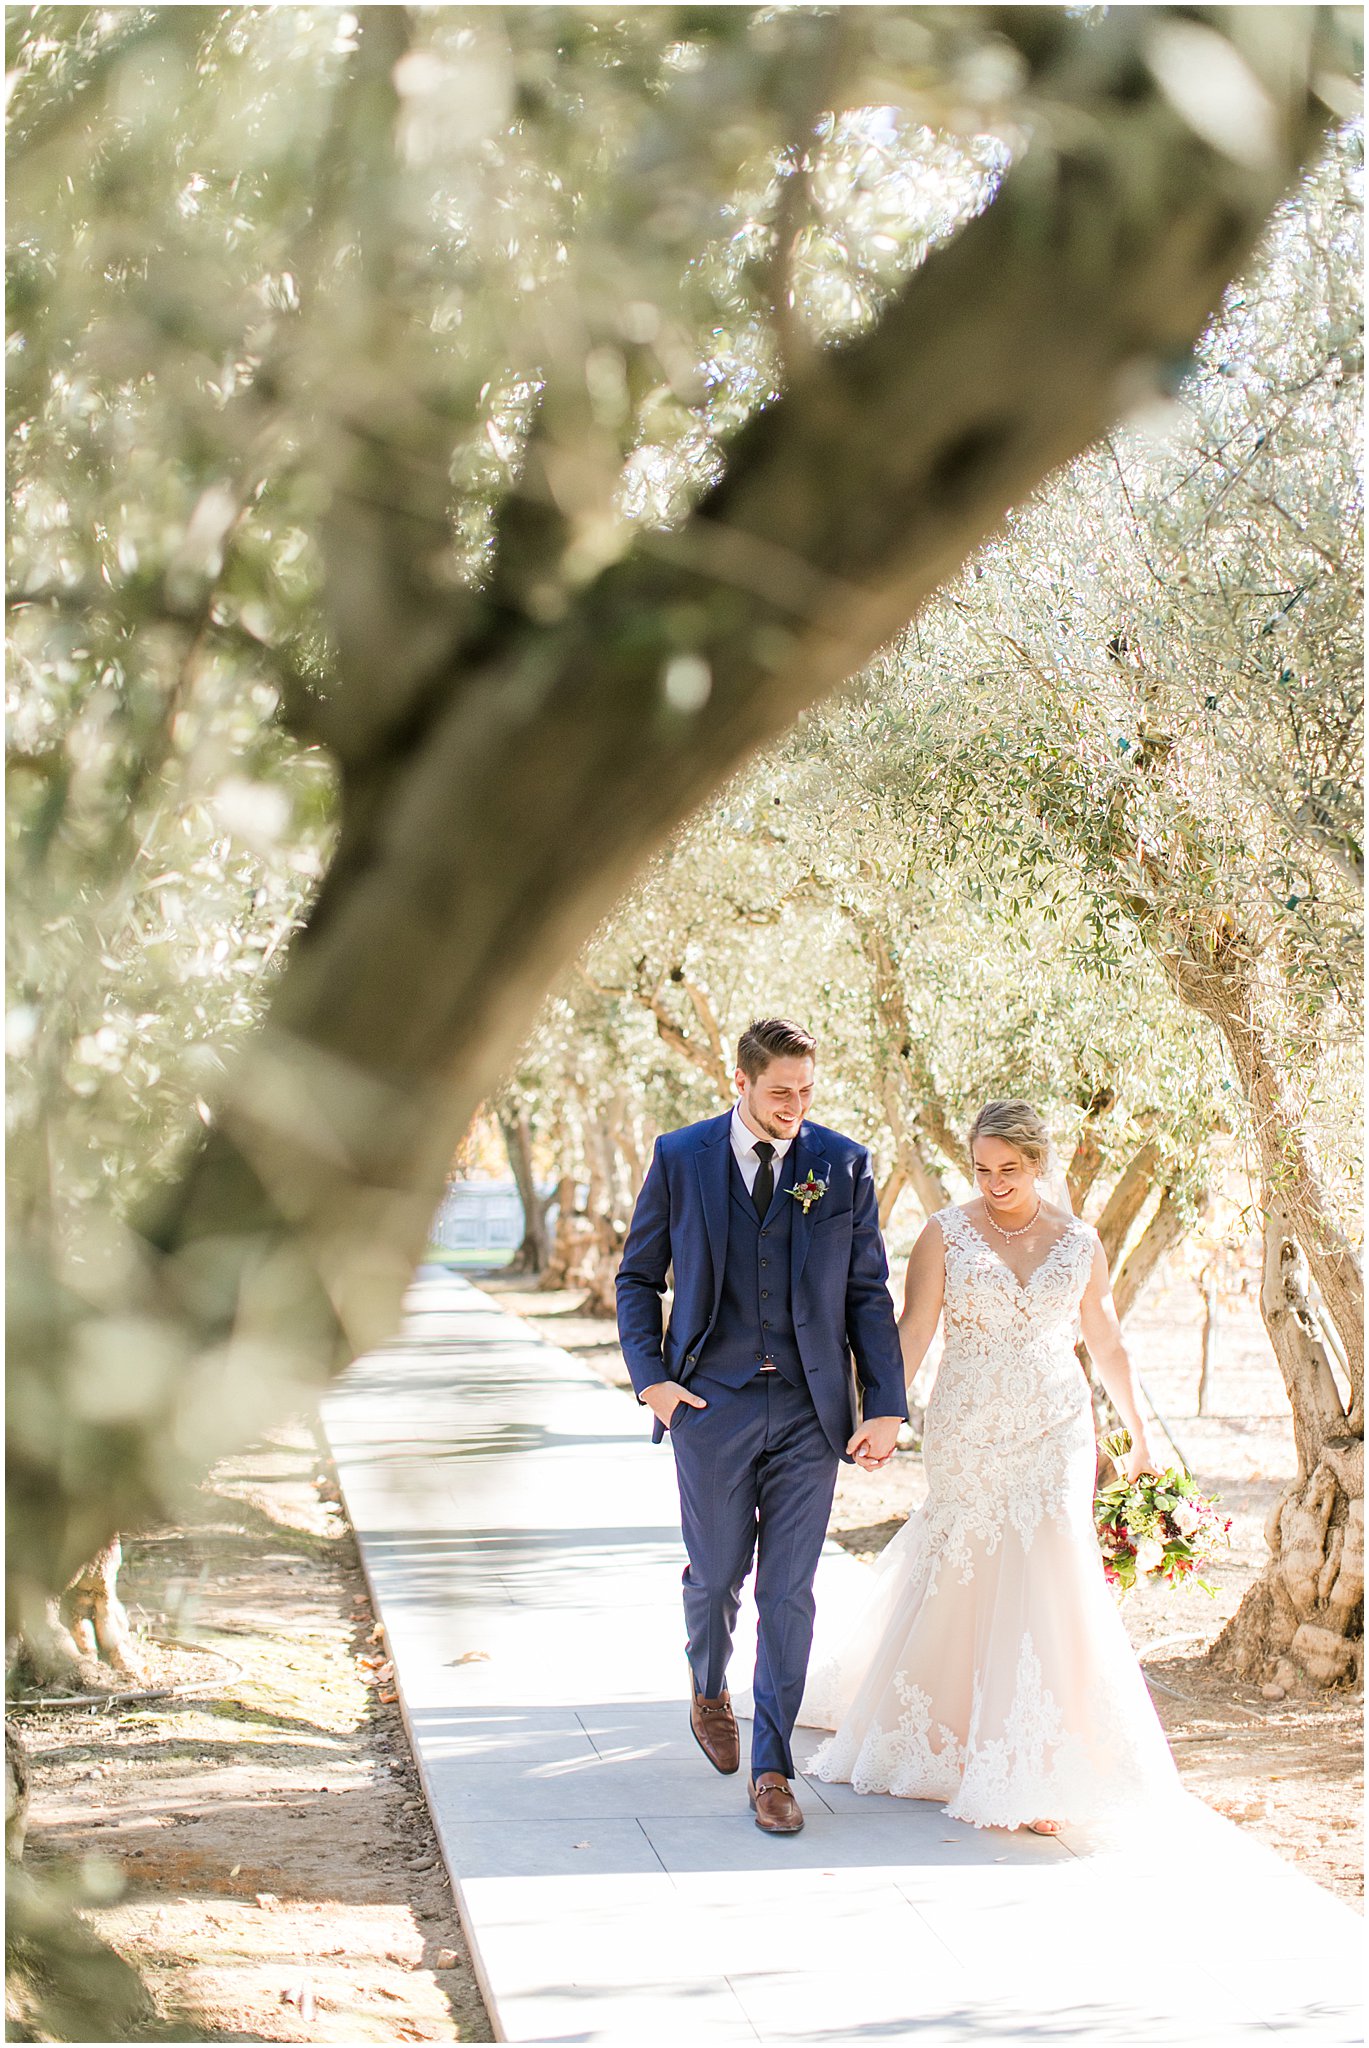 Sycamore Creek Vineyards Wedding - Live Love Leal - Fall Wedding - Bay Area Wedding Photographer - Angela Sue Photography_0039.jpg